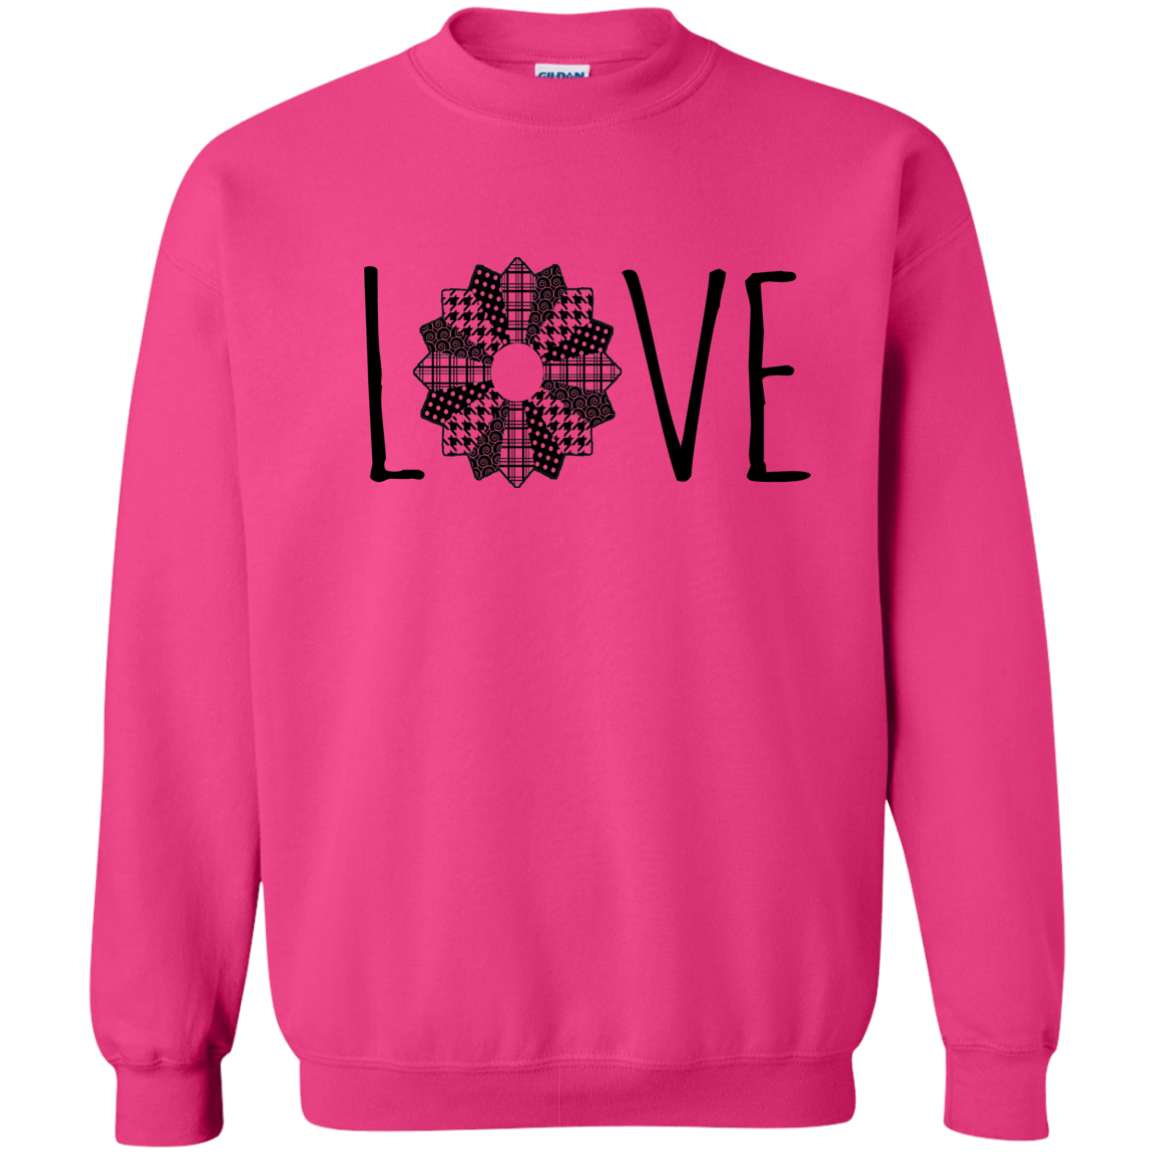 LOVE Quilt Crewneck Pullover Sweatshirt